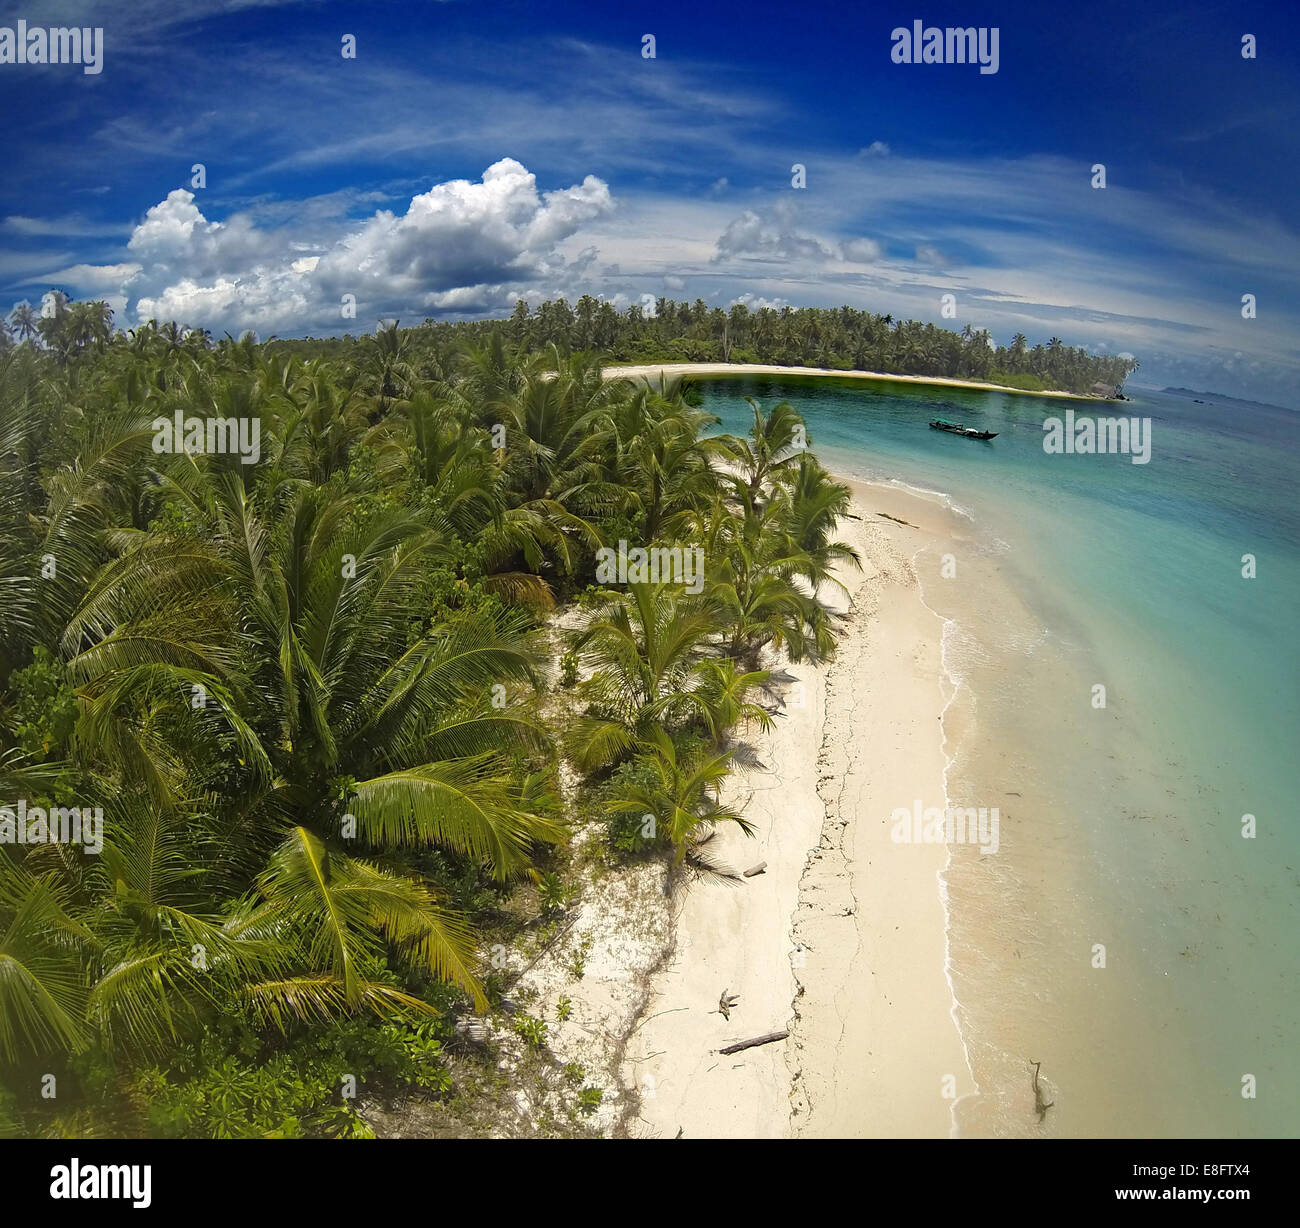 Indonesia, Mentawai Islands, Aerial view of tropical beach Stock Photo